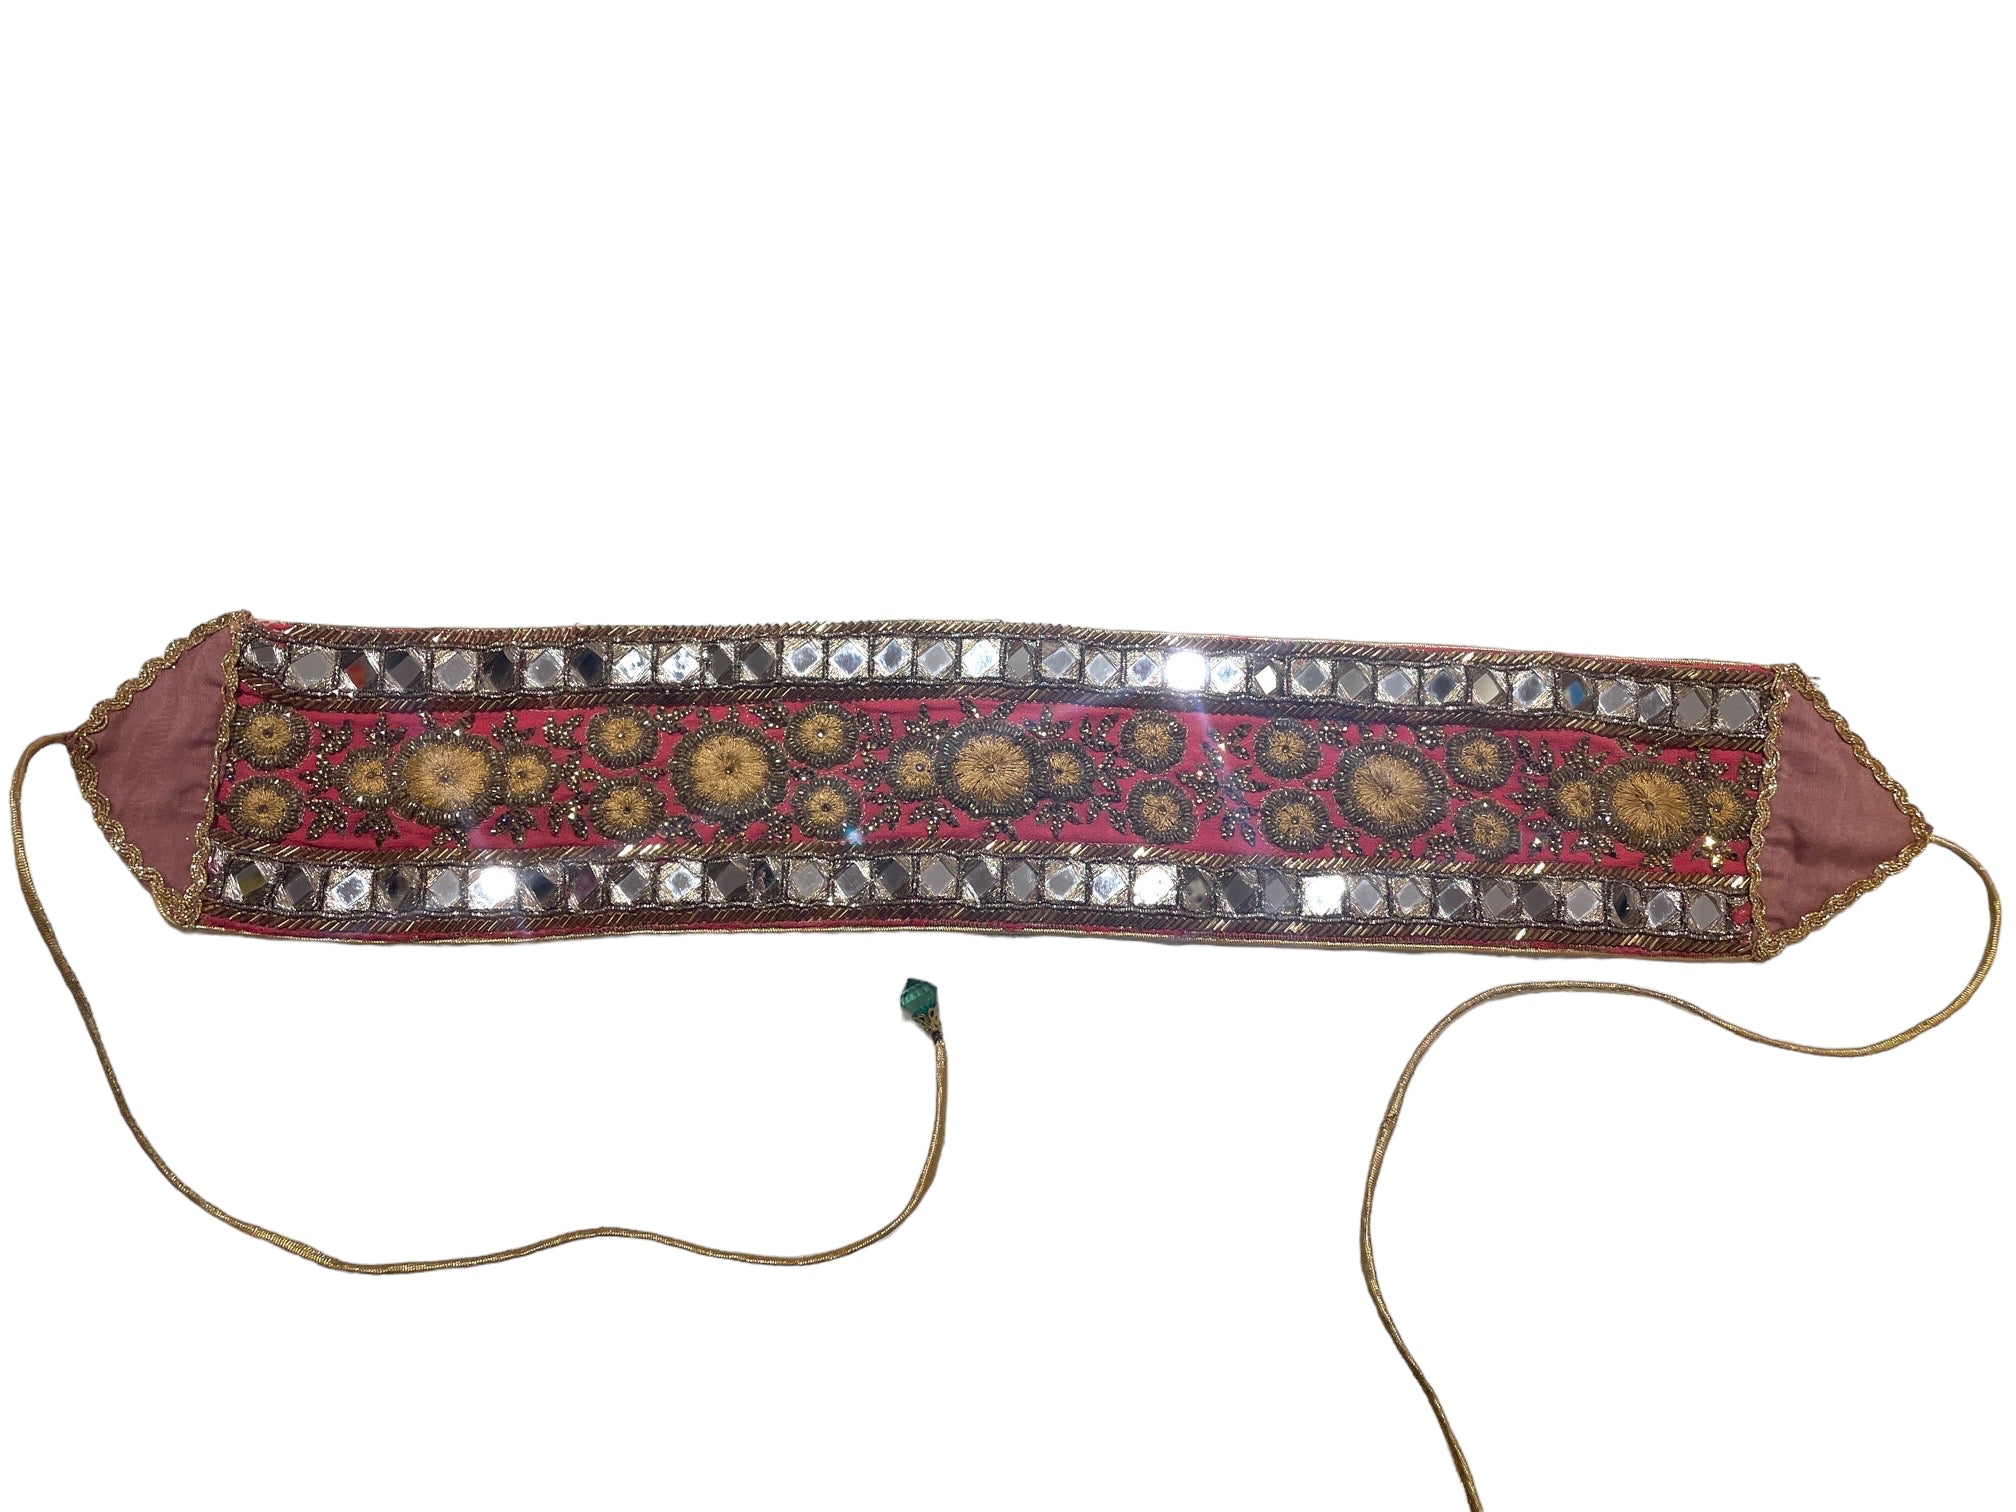 Zardosi & Mirror Heavywork Belt - Vintage India NYC